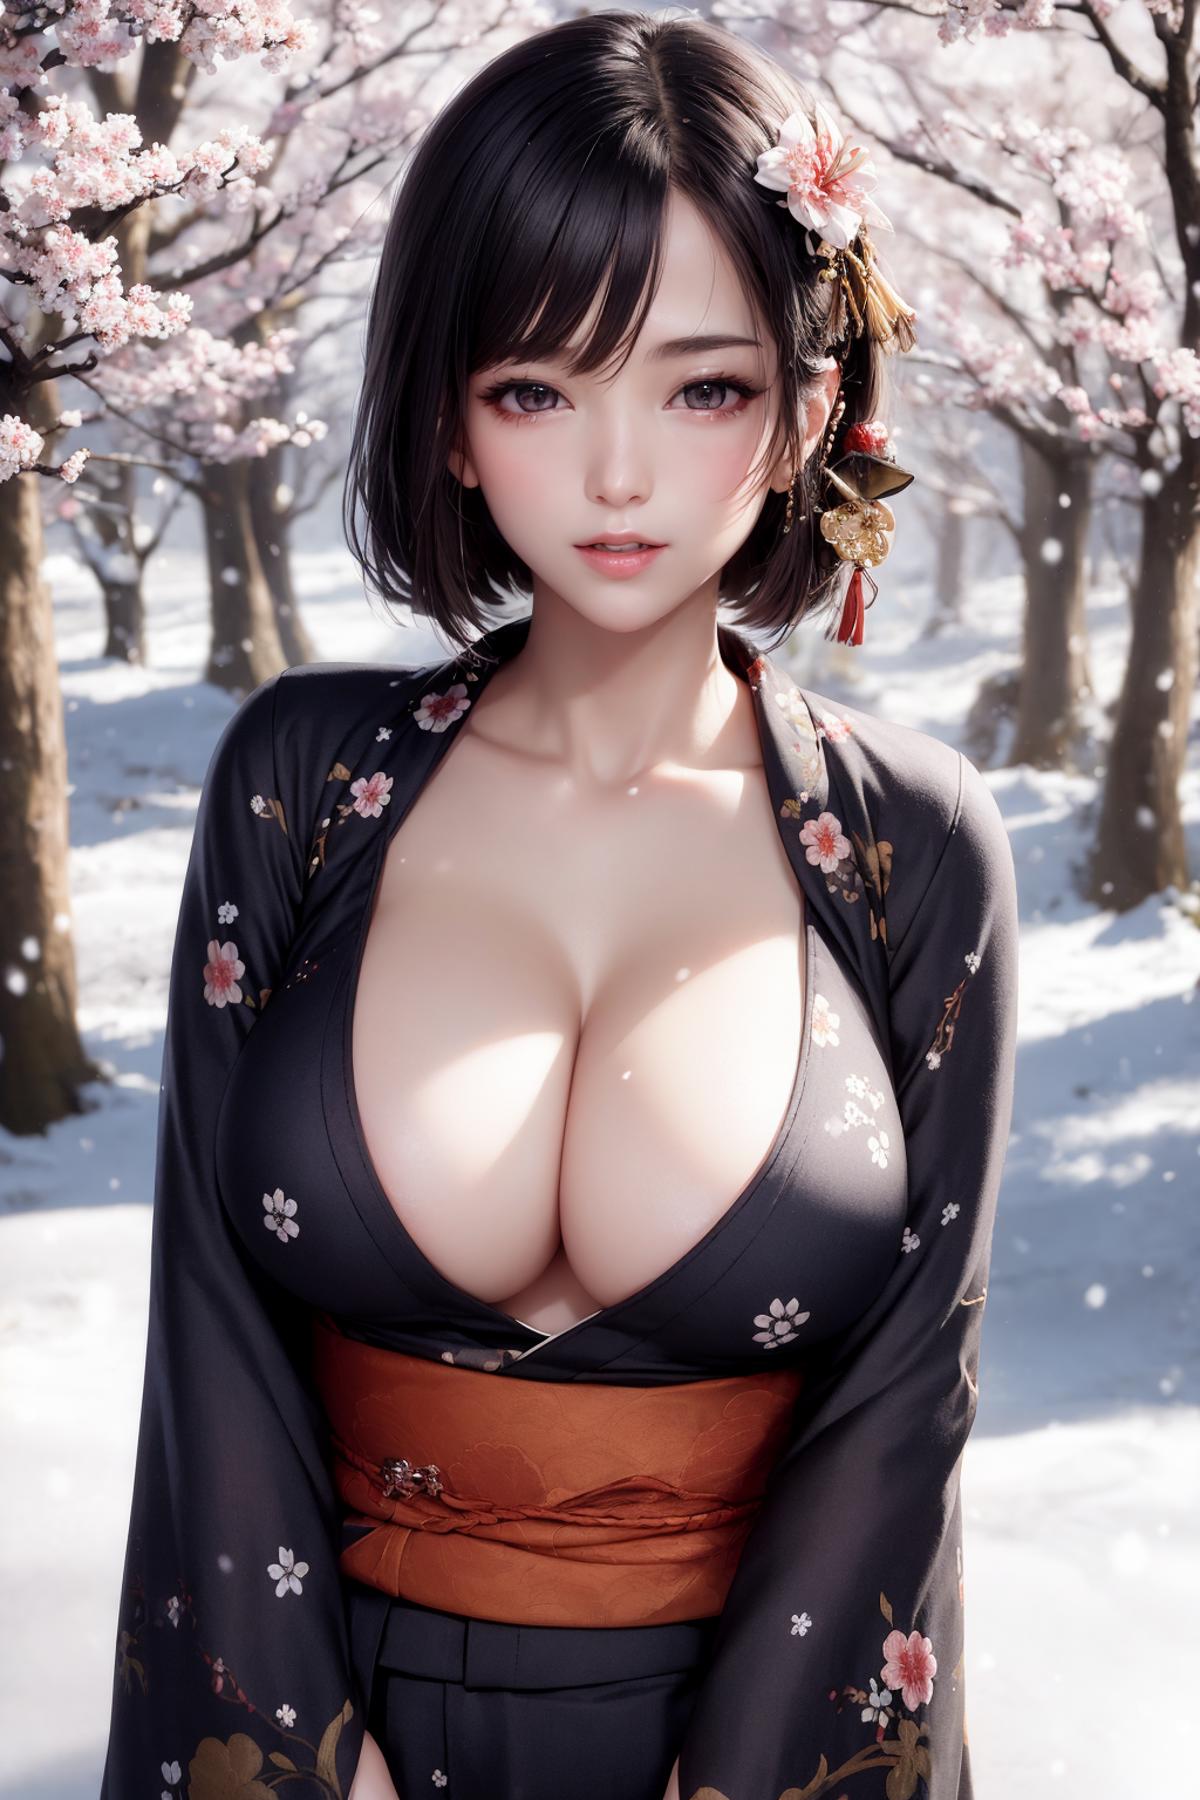 ultra detailed 8k cg, kimono, perfect face, beautiful face, mature female, large breasts, outdoors, sakura, snowing, looki...